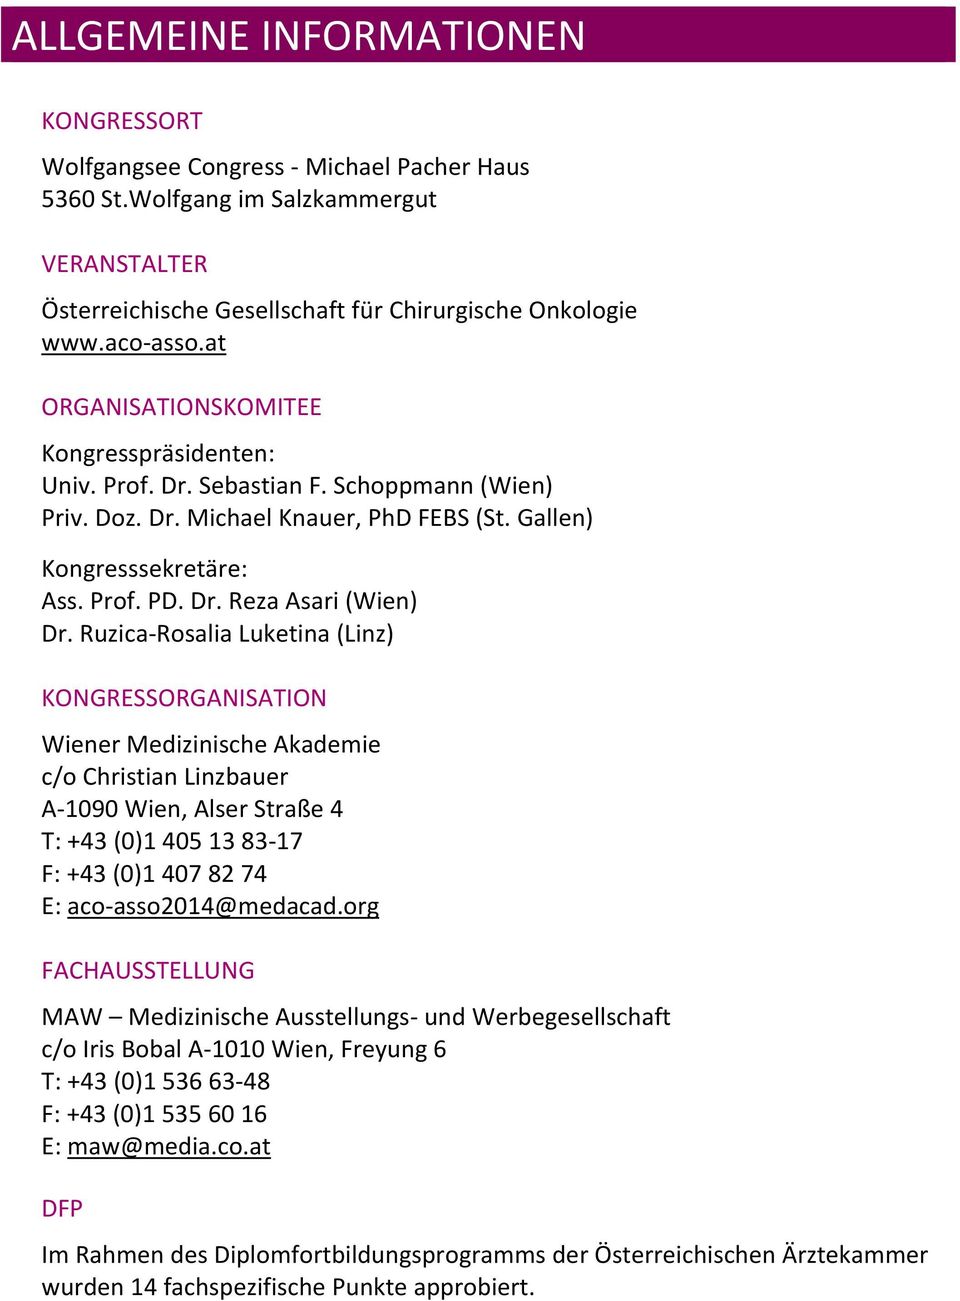 Ruzica Rosalia Luketina (Linz) KONGRESSORGANISATION Wiener Medizinische Akademie c/o Christian Linzbauer A 1090 Wien, Alser Straße 4 T: +43 (0)1 40 13 83 17 F: +43 (0)1 407 82 74 E: aco